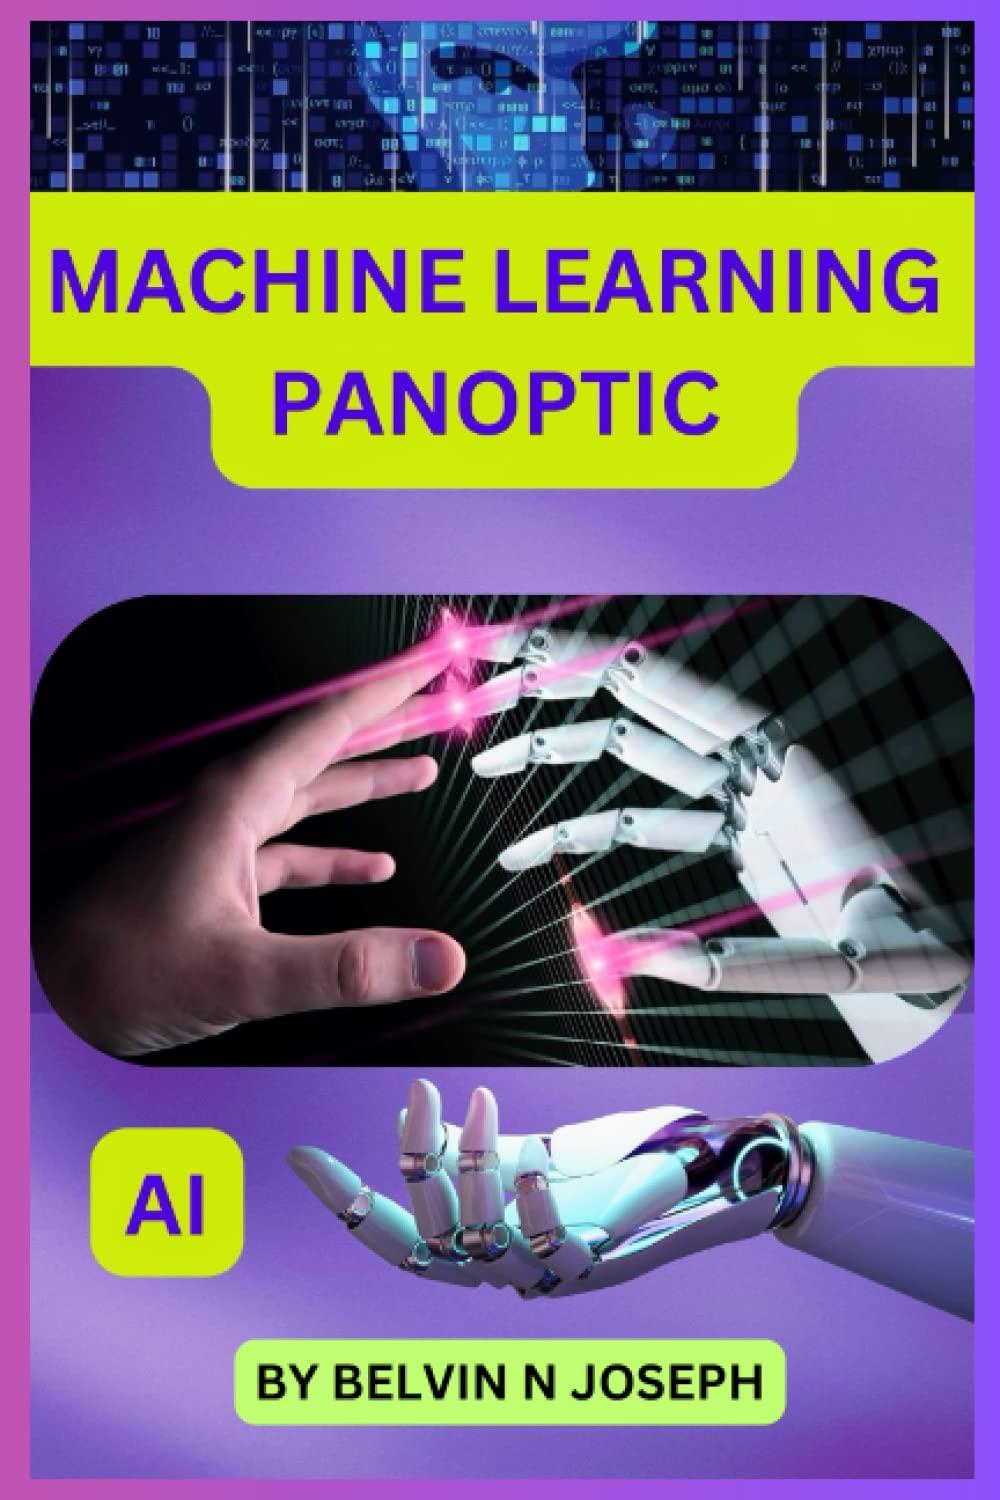 machine learning panoptic 1st edition belvin nalubamba joseph b0c47lp2yr, 979-8393201692